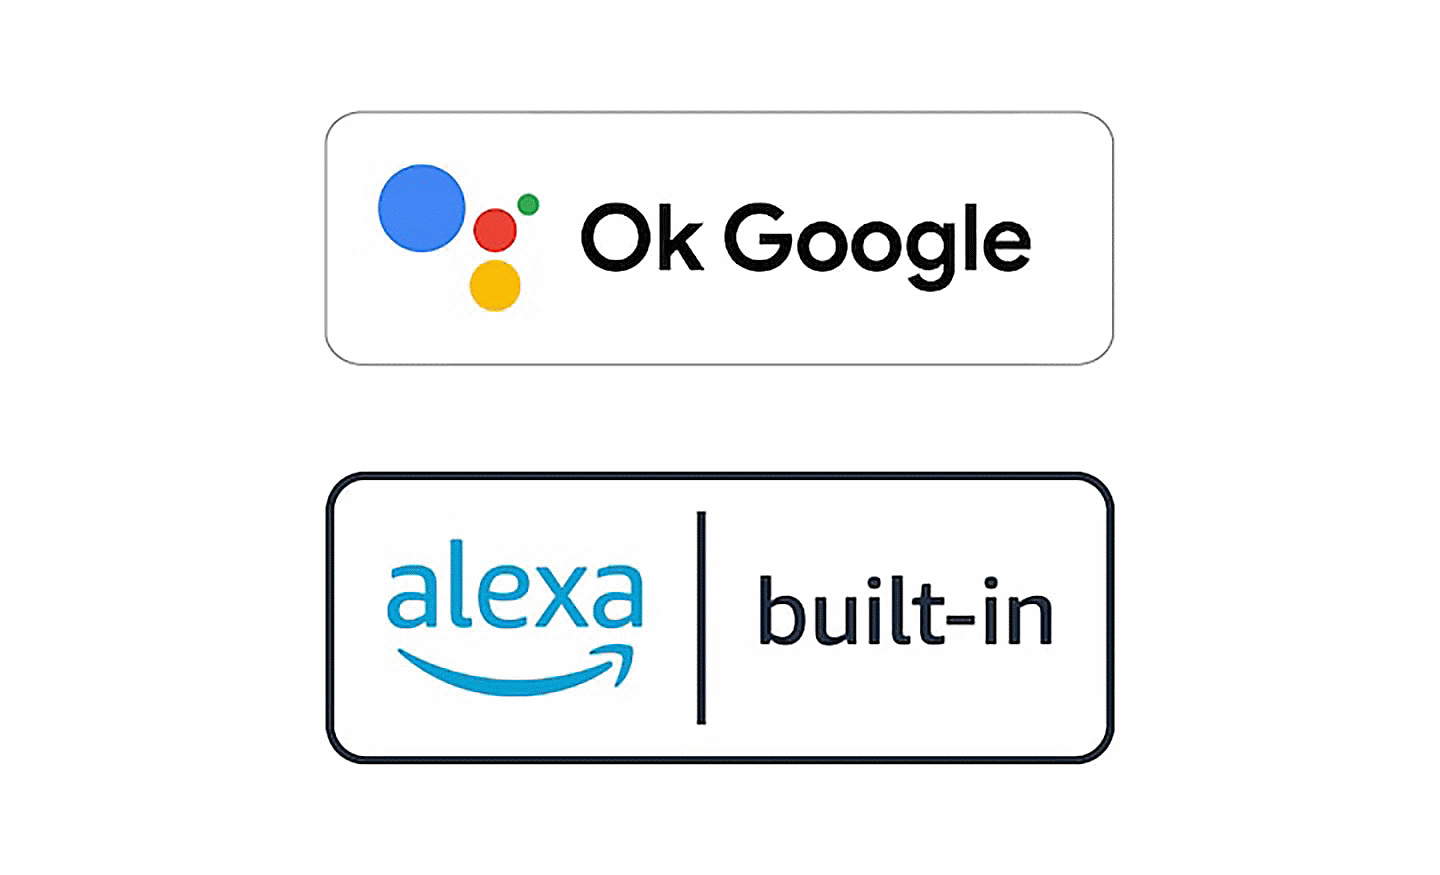 Image d'un logo Ok Google et d'un logo alexa intégré